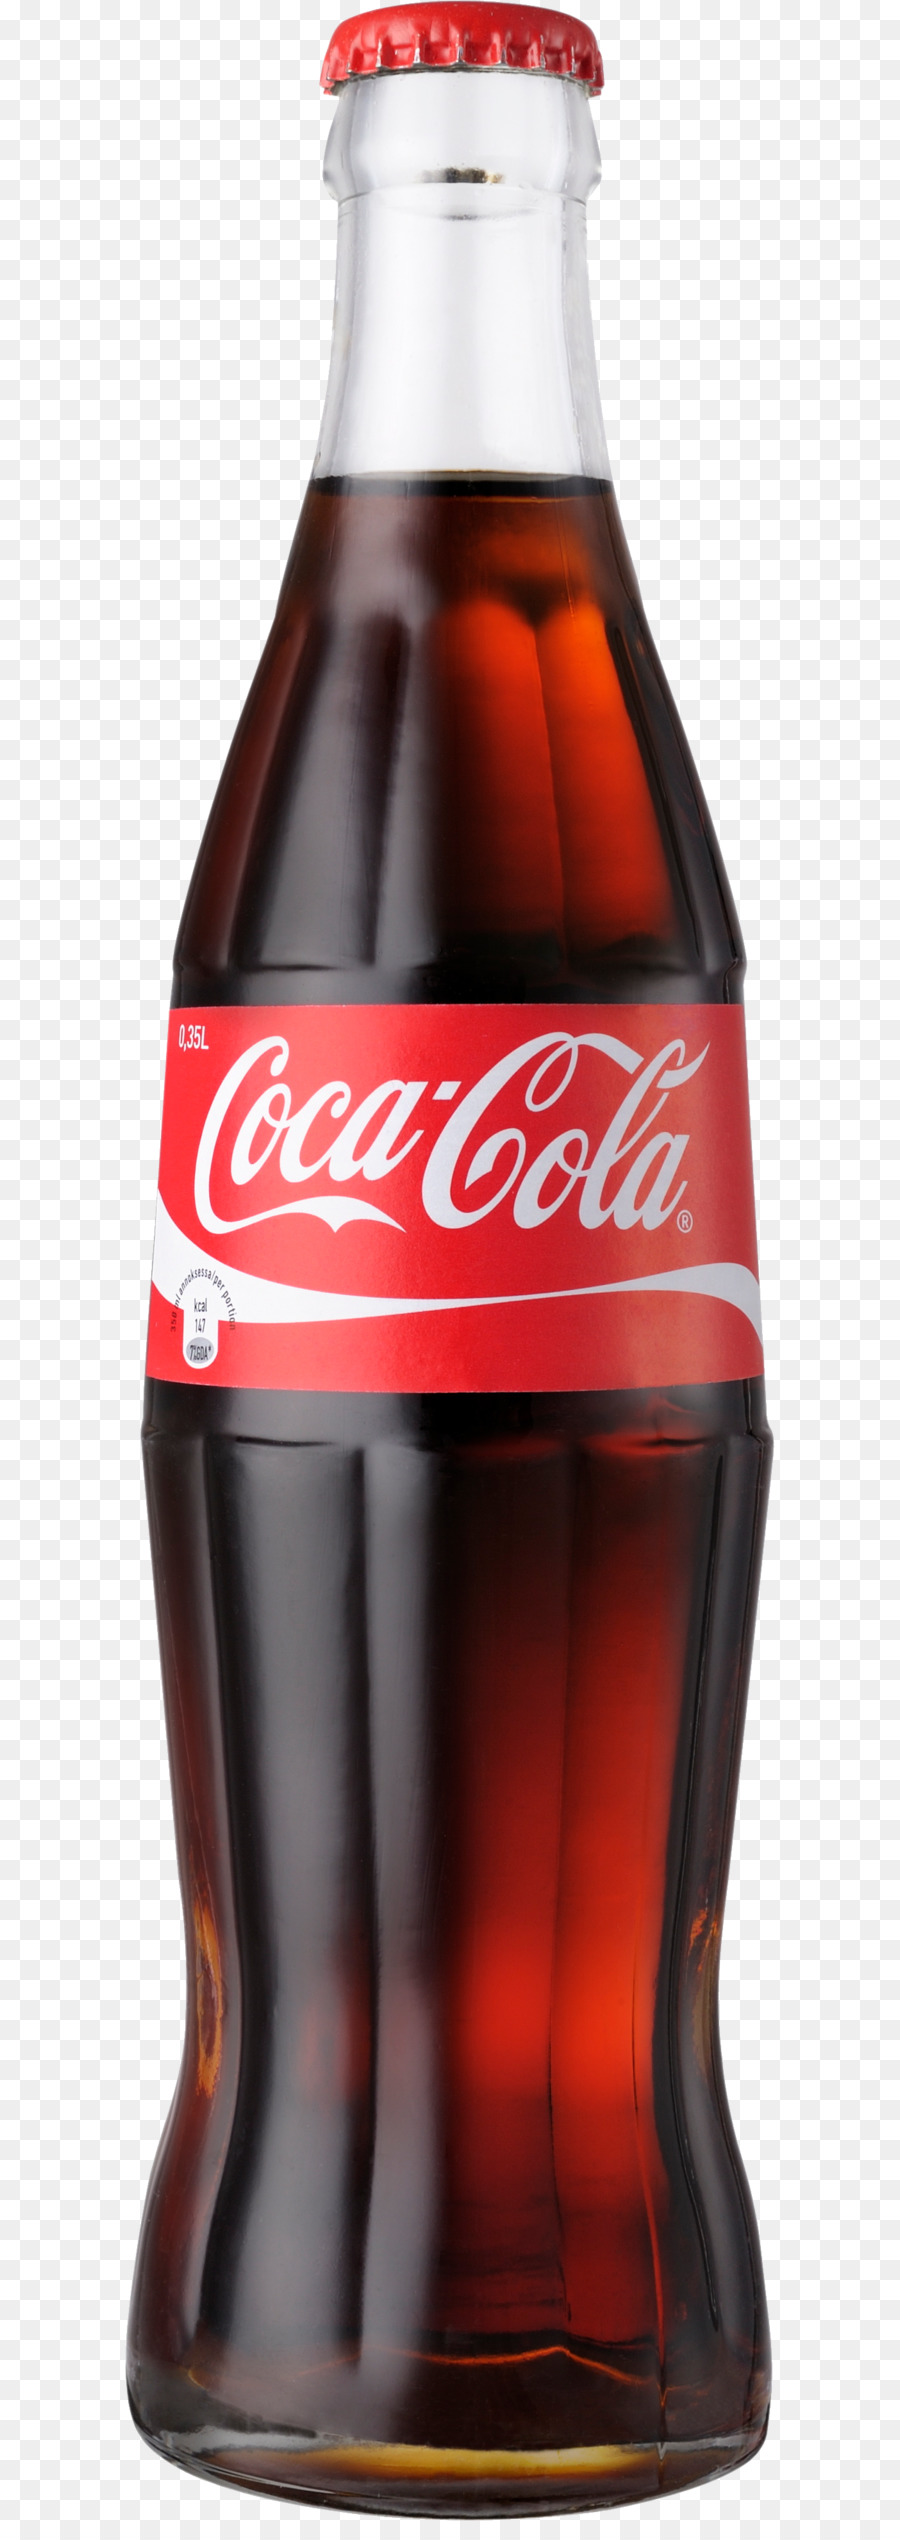 Coca-Cola Soft drink Diet Coke - Coca cola bottle PNG image png download - 1014*3933 - Free Transparent Coca Cola png Download.